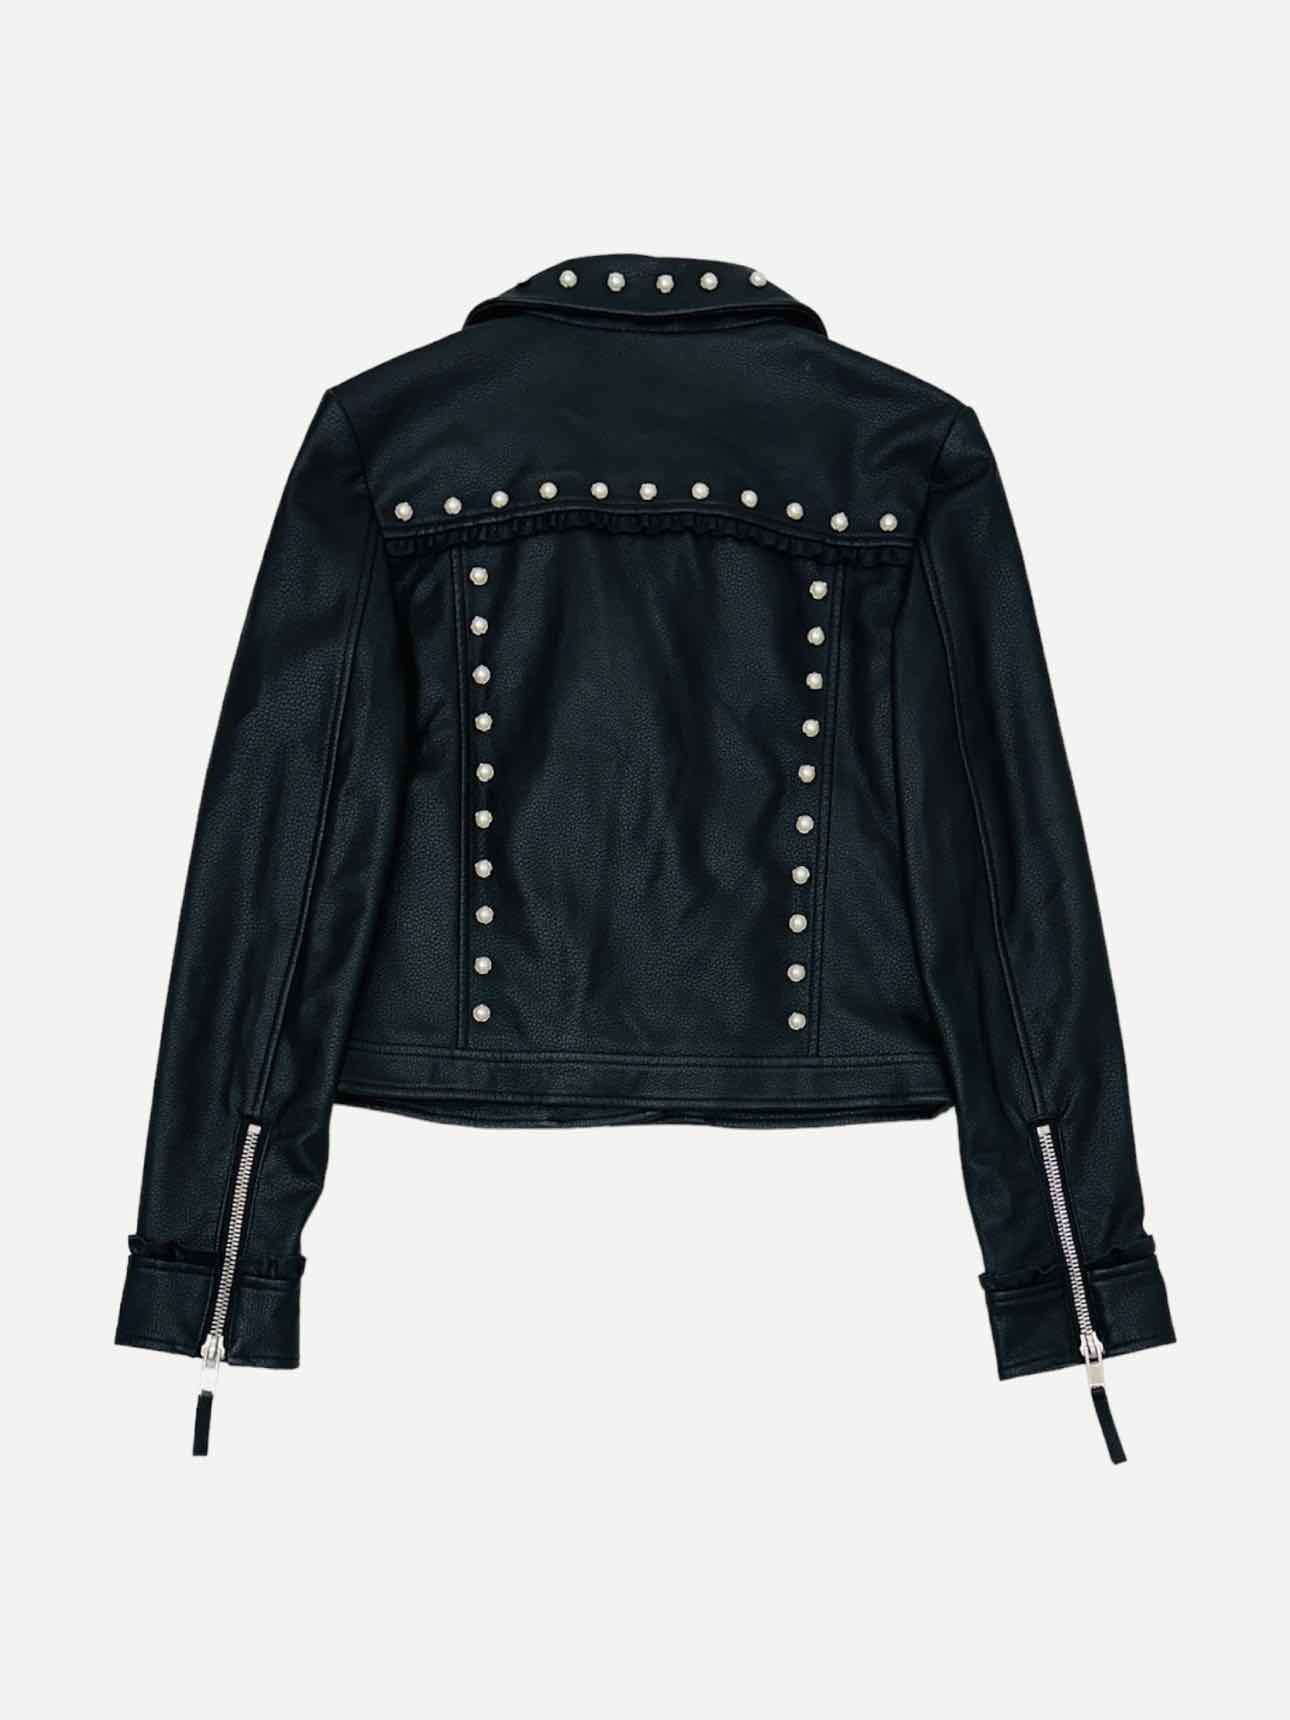 TWIN-SET Leather Black Pearl Embellished Jacket